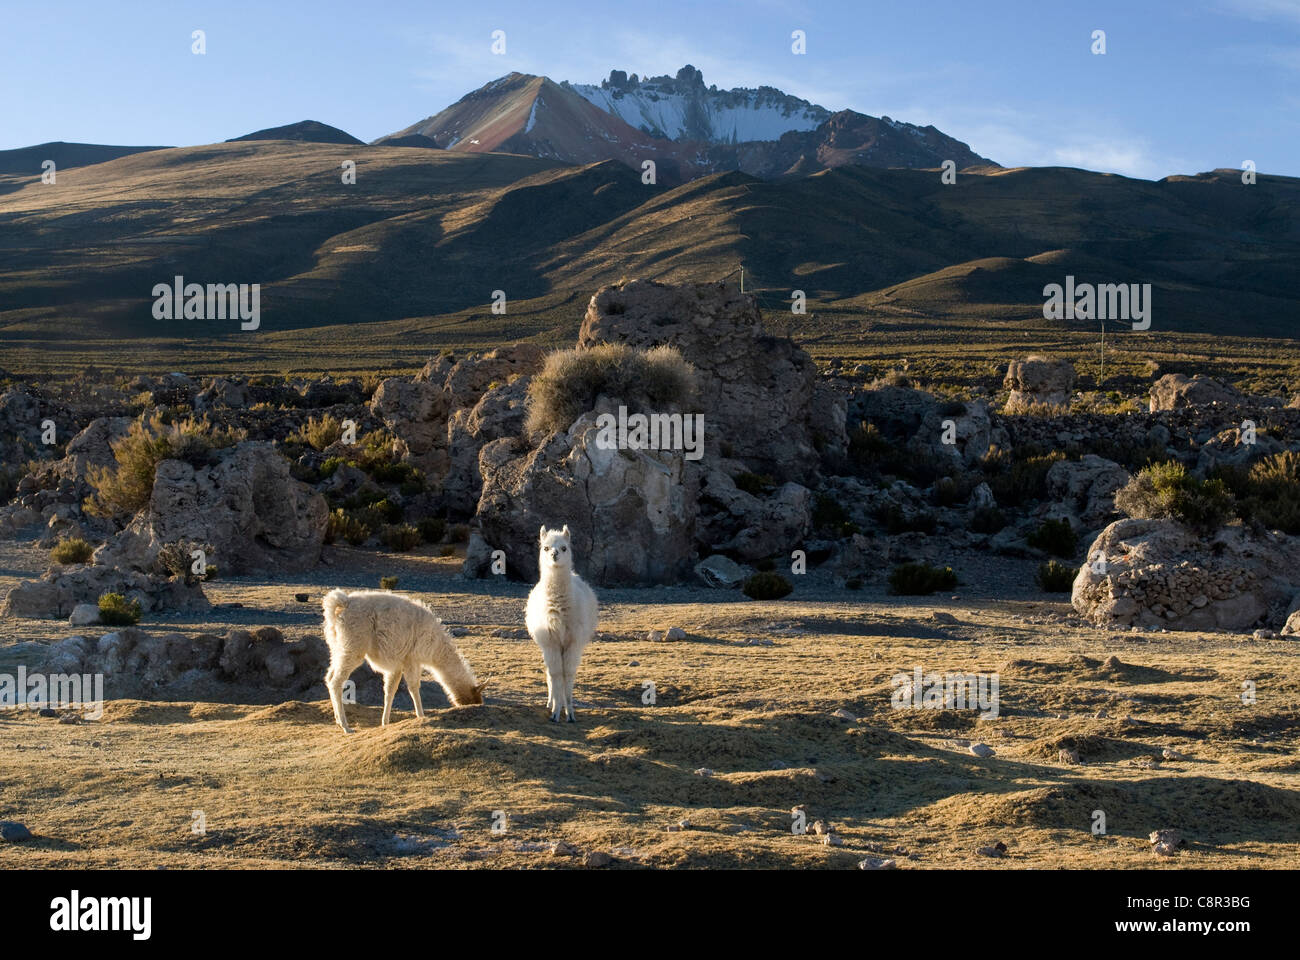 Lamas around the bolivian salt desert, Salar de Uyuni. Stock Photo